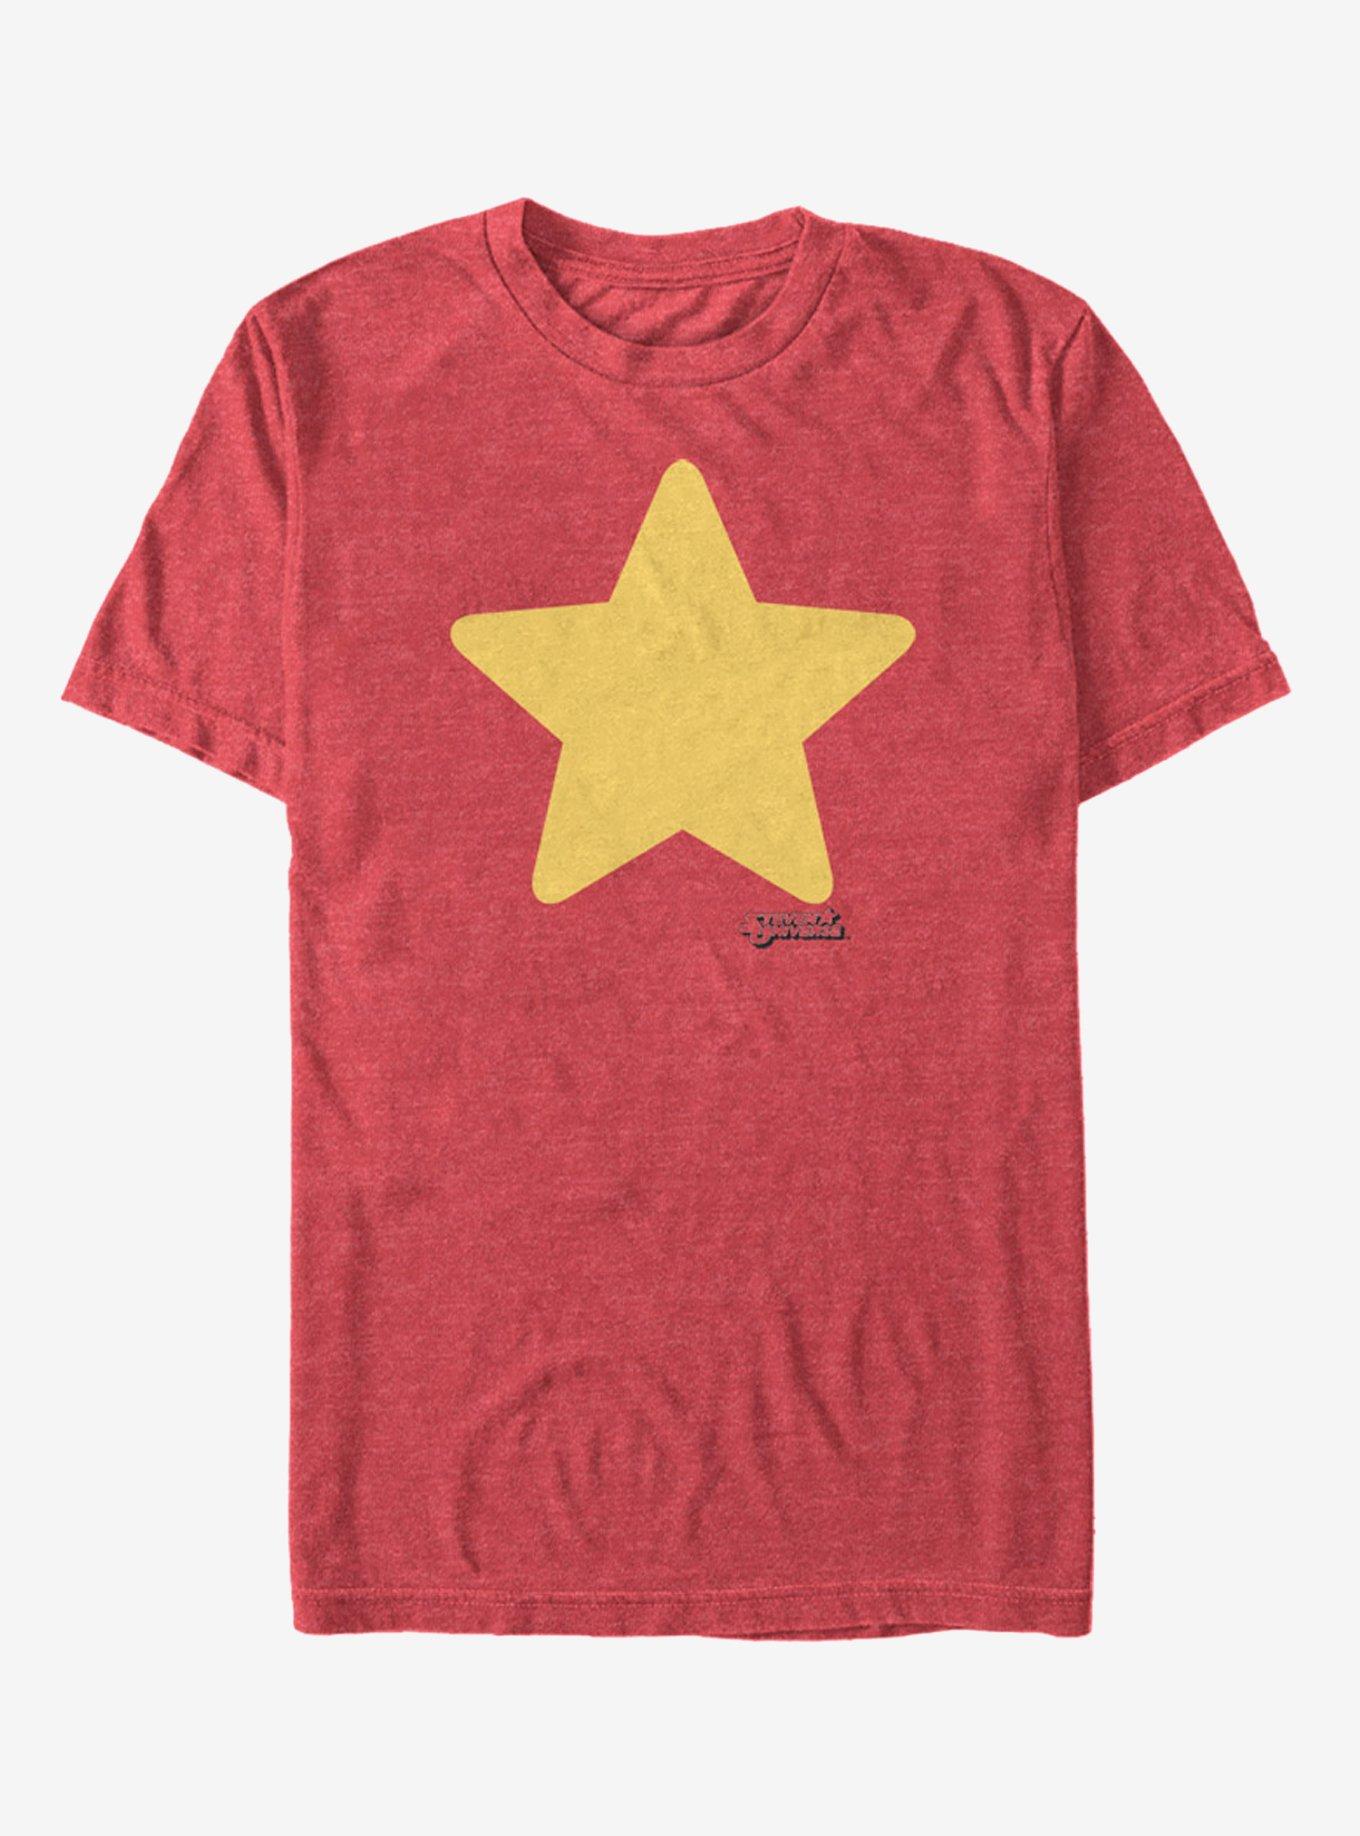 Steven Universe Star T-Shirt, RED HTR, hi-res